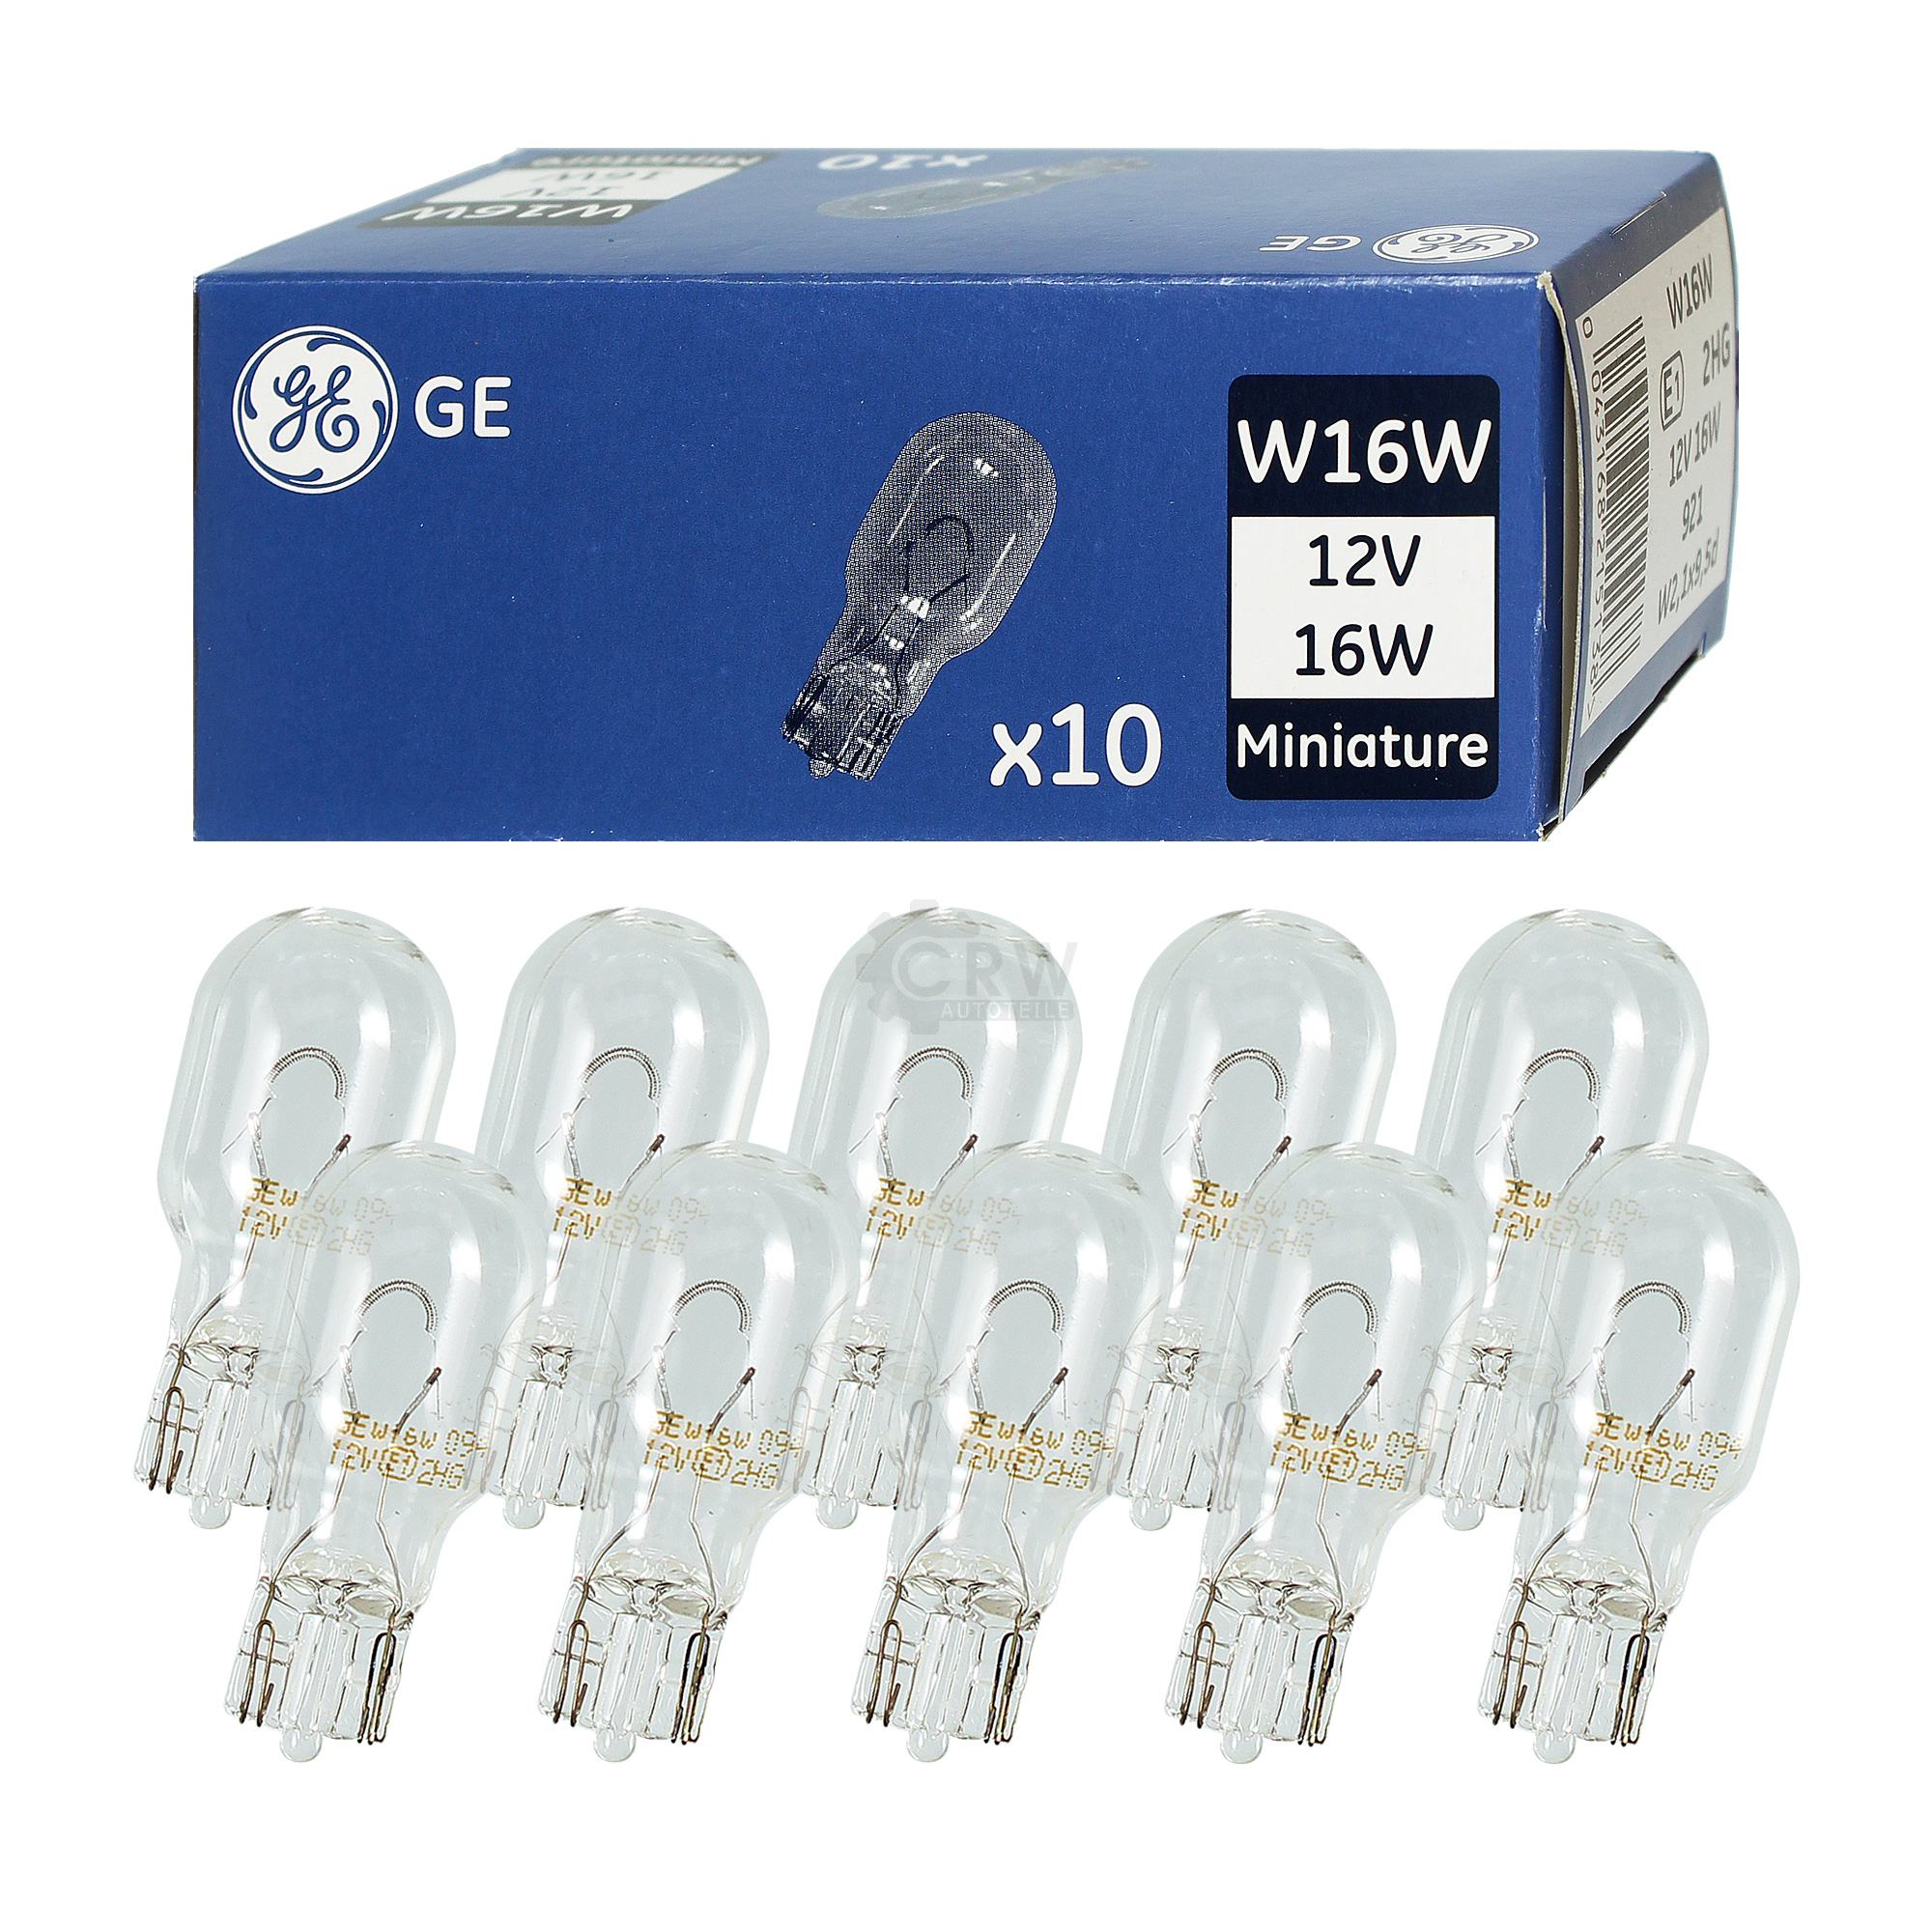 General Electric (GE) Miniature W16W 12V 16W W2,1x9,5d 10 Stück